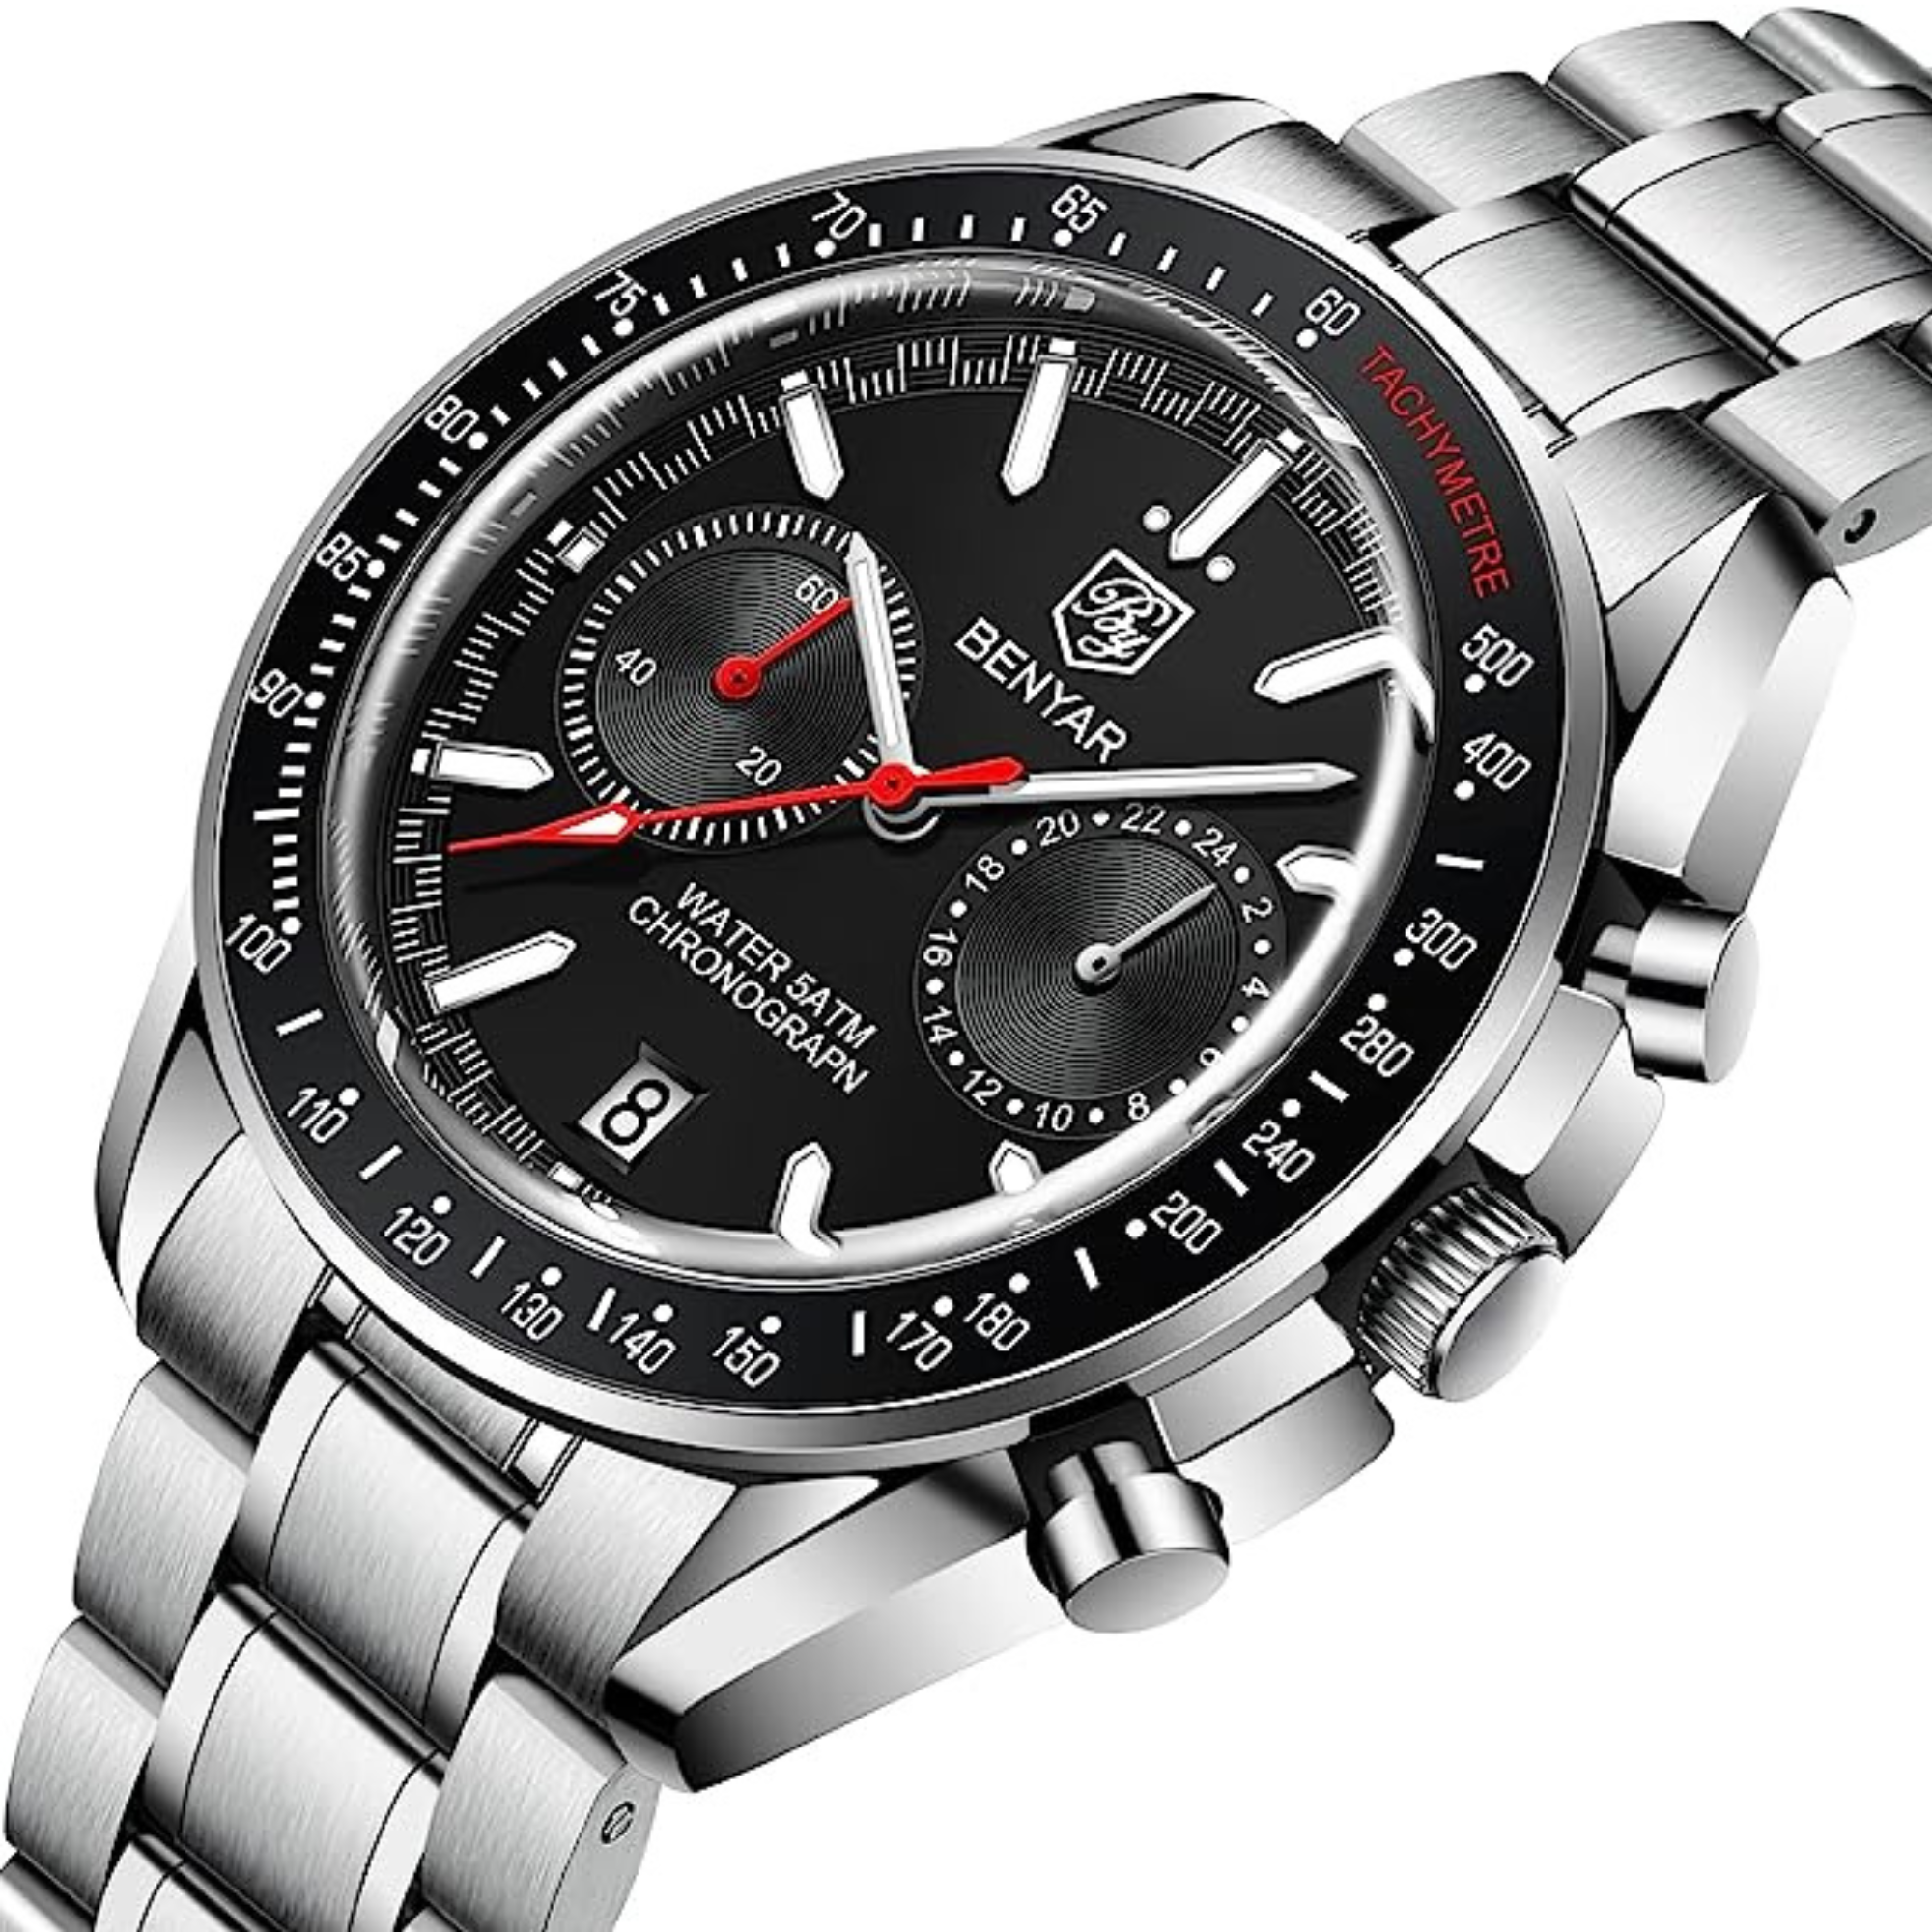 Benyar Latest BY-5194 Luxury Men Automatic Mechanical Watches Waterproof Fashion Watch - Black benyar watches online india dream watches